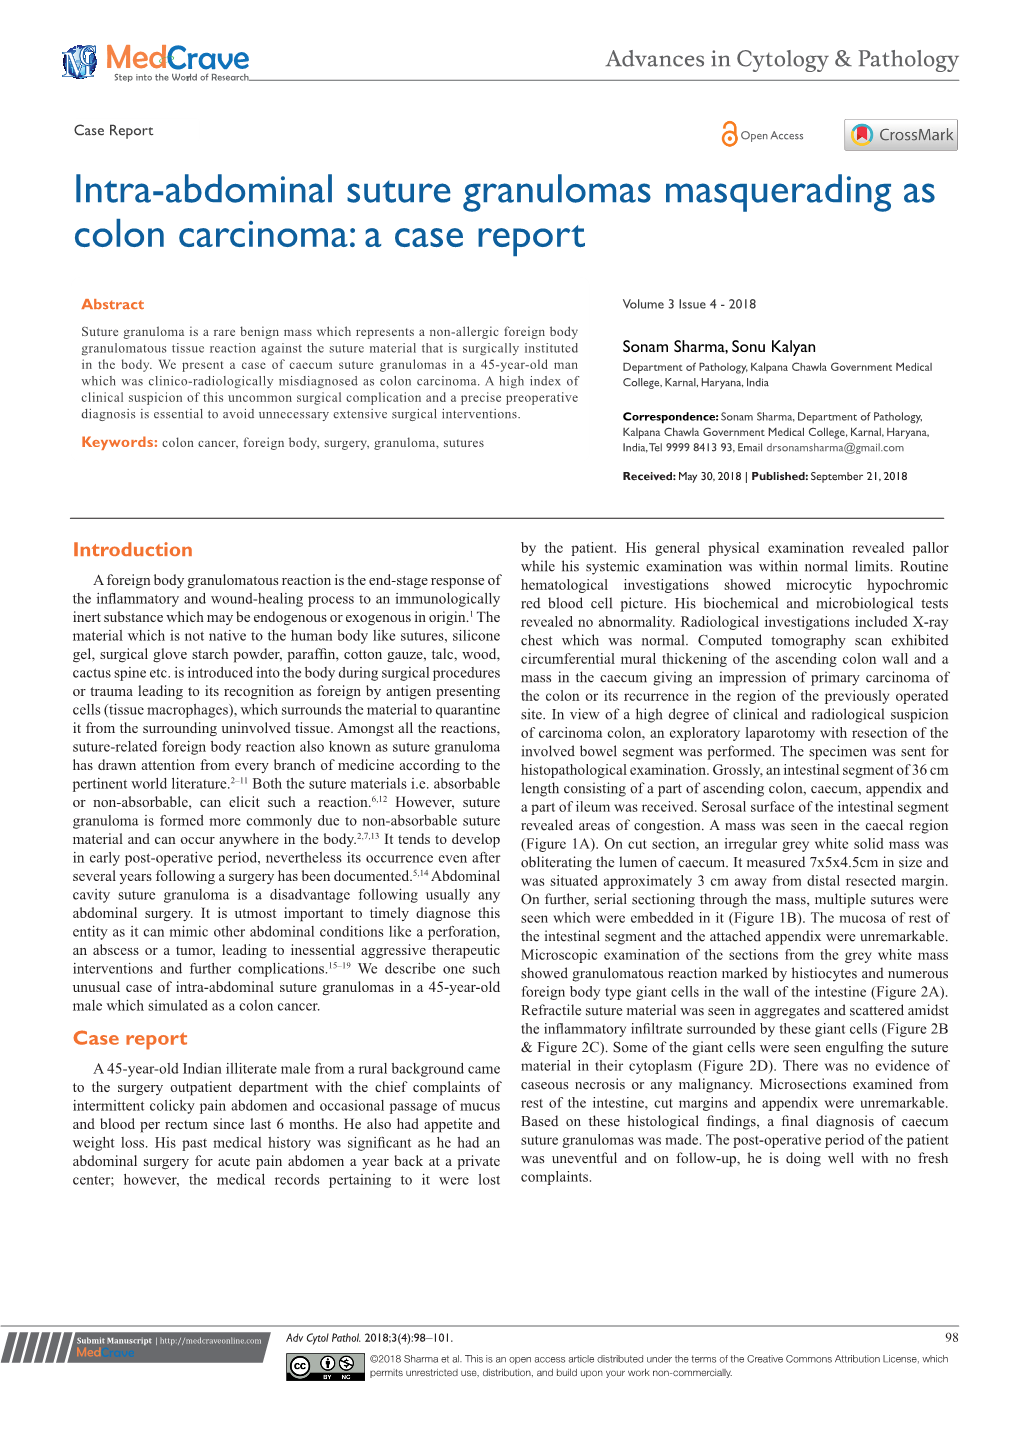 Intra-Abdominal Suture Granulomas Masquerading As Colon Carcinoma: a Case Report